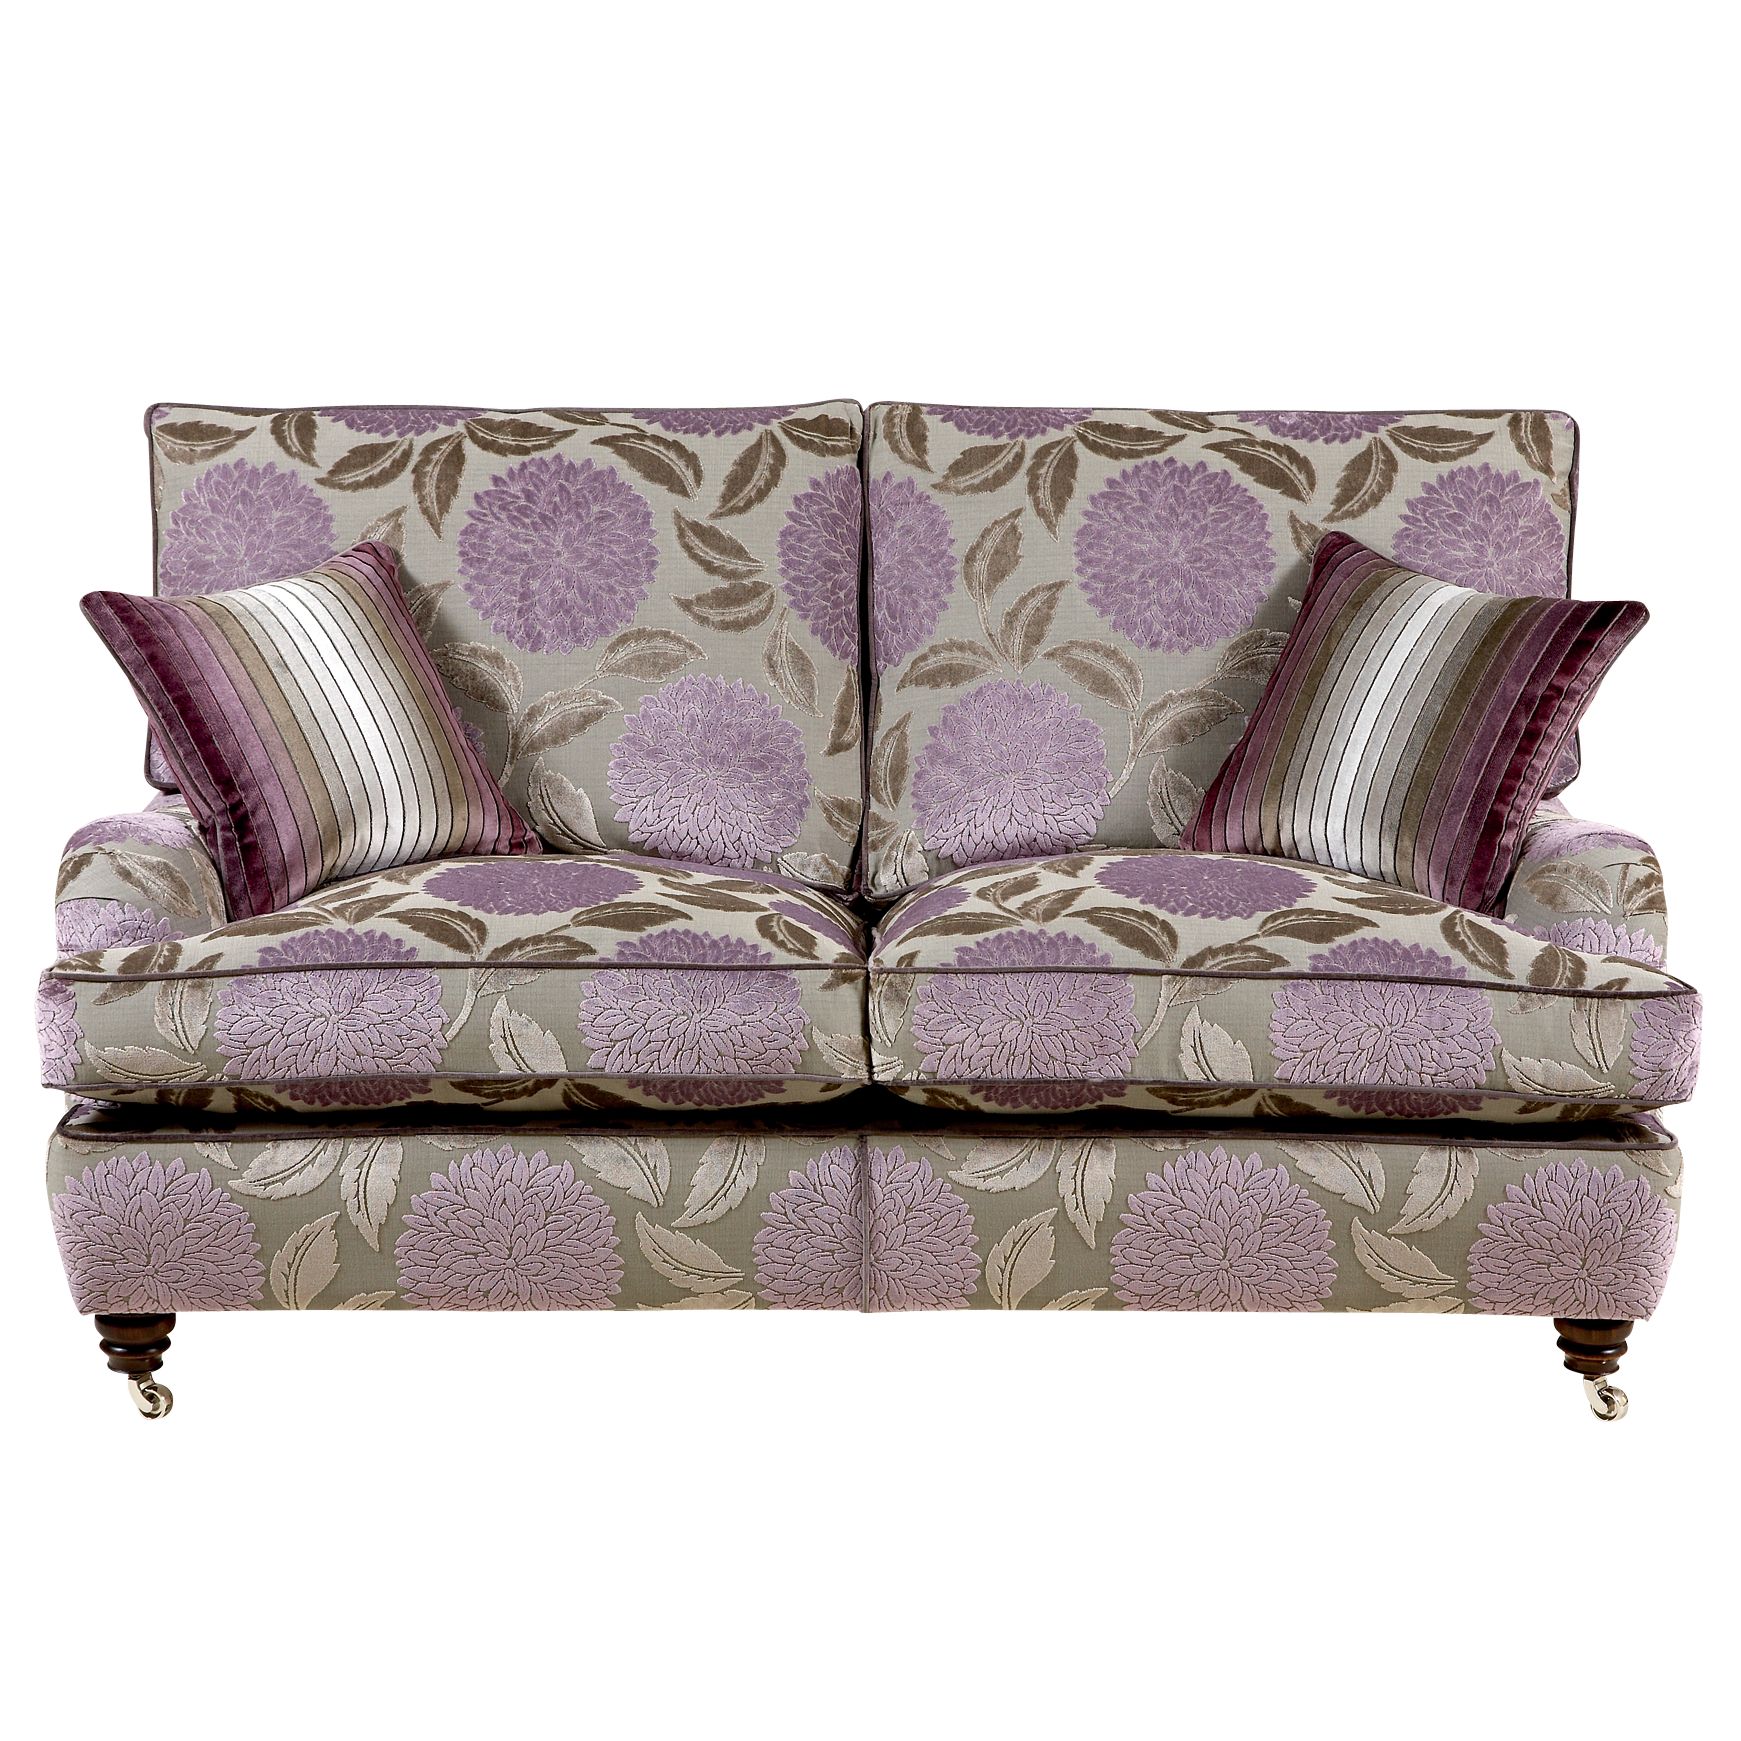 Duresta Walcot Small Sofa, Claverton Silver/Lilac at John Lewis